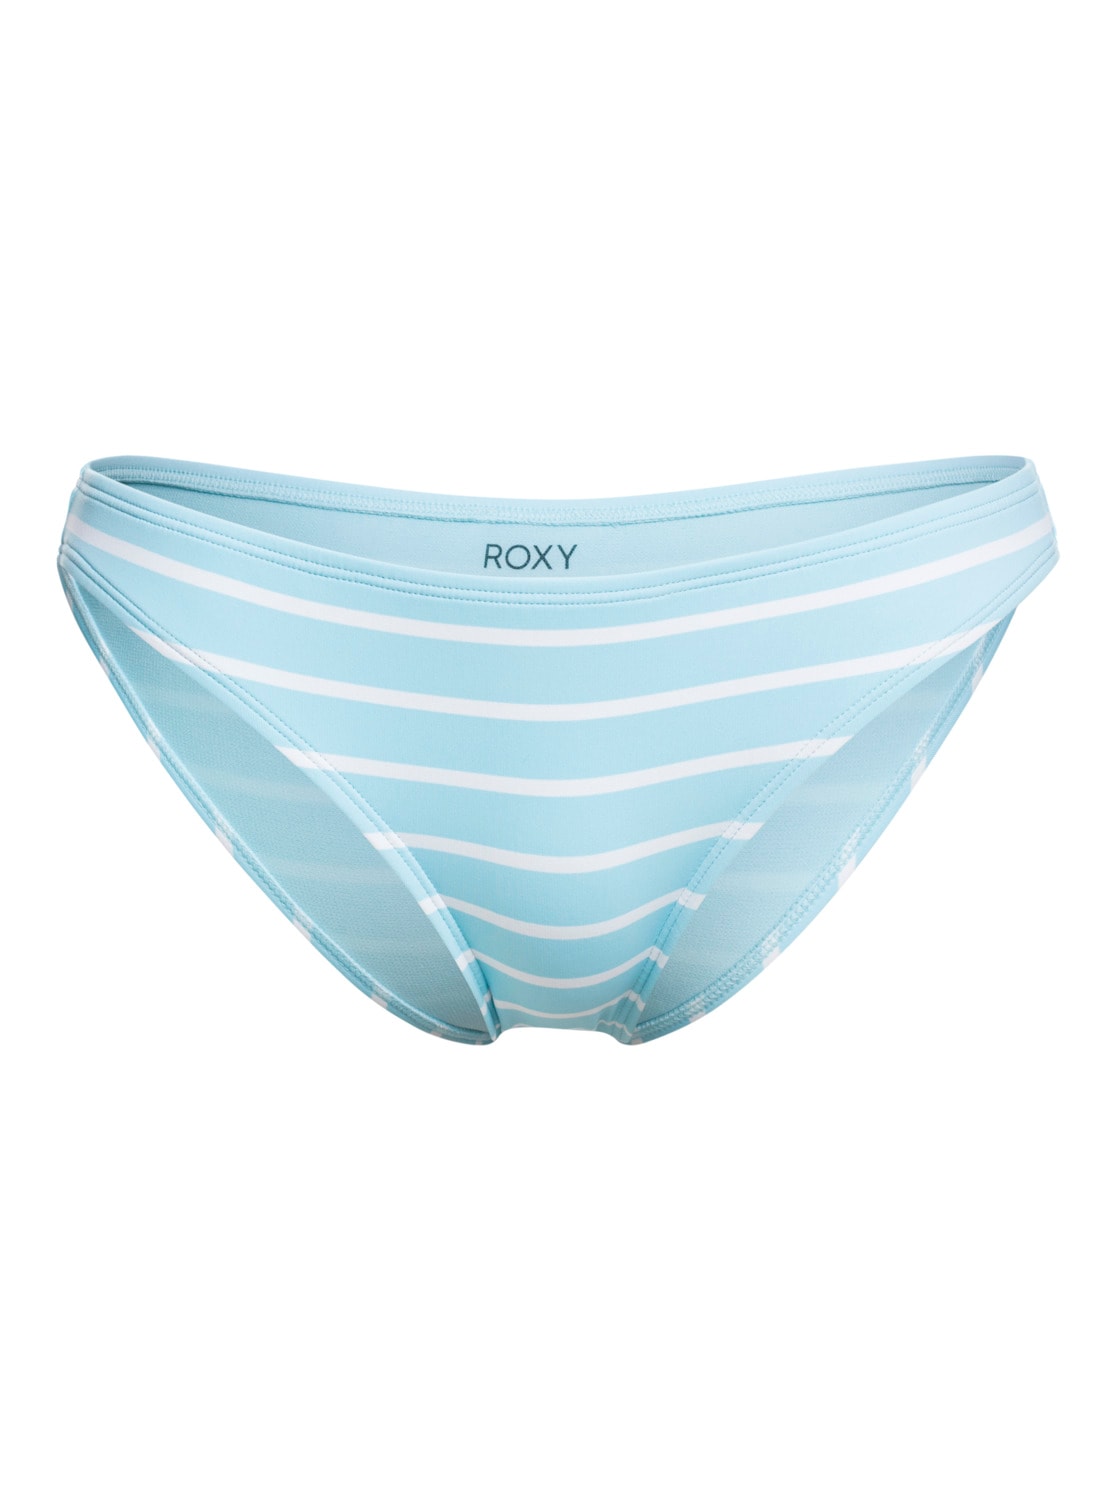 Roxy Bikini-Hose »Roxy Into the Sun« von Roxy